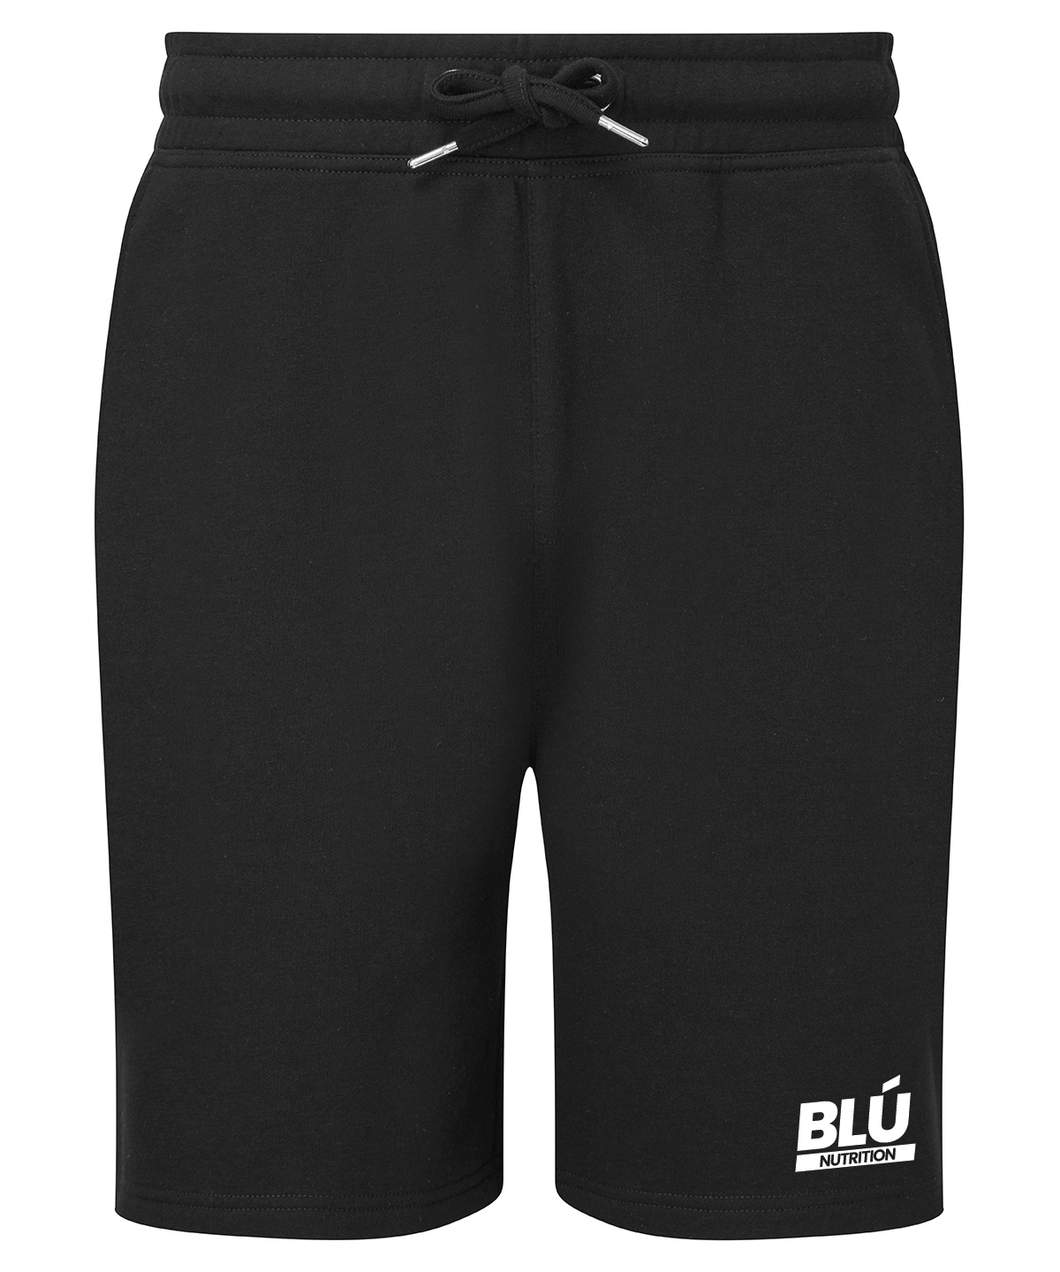 Men's jogger shorts